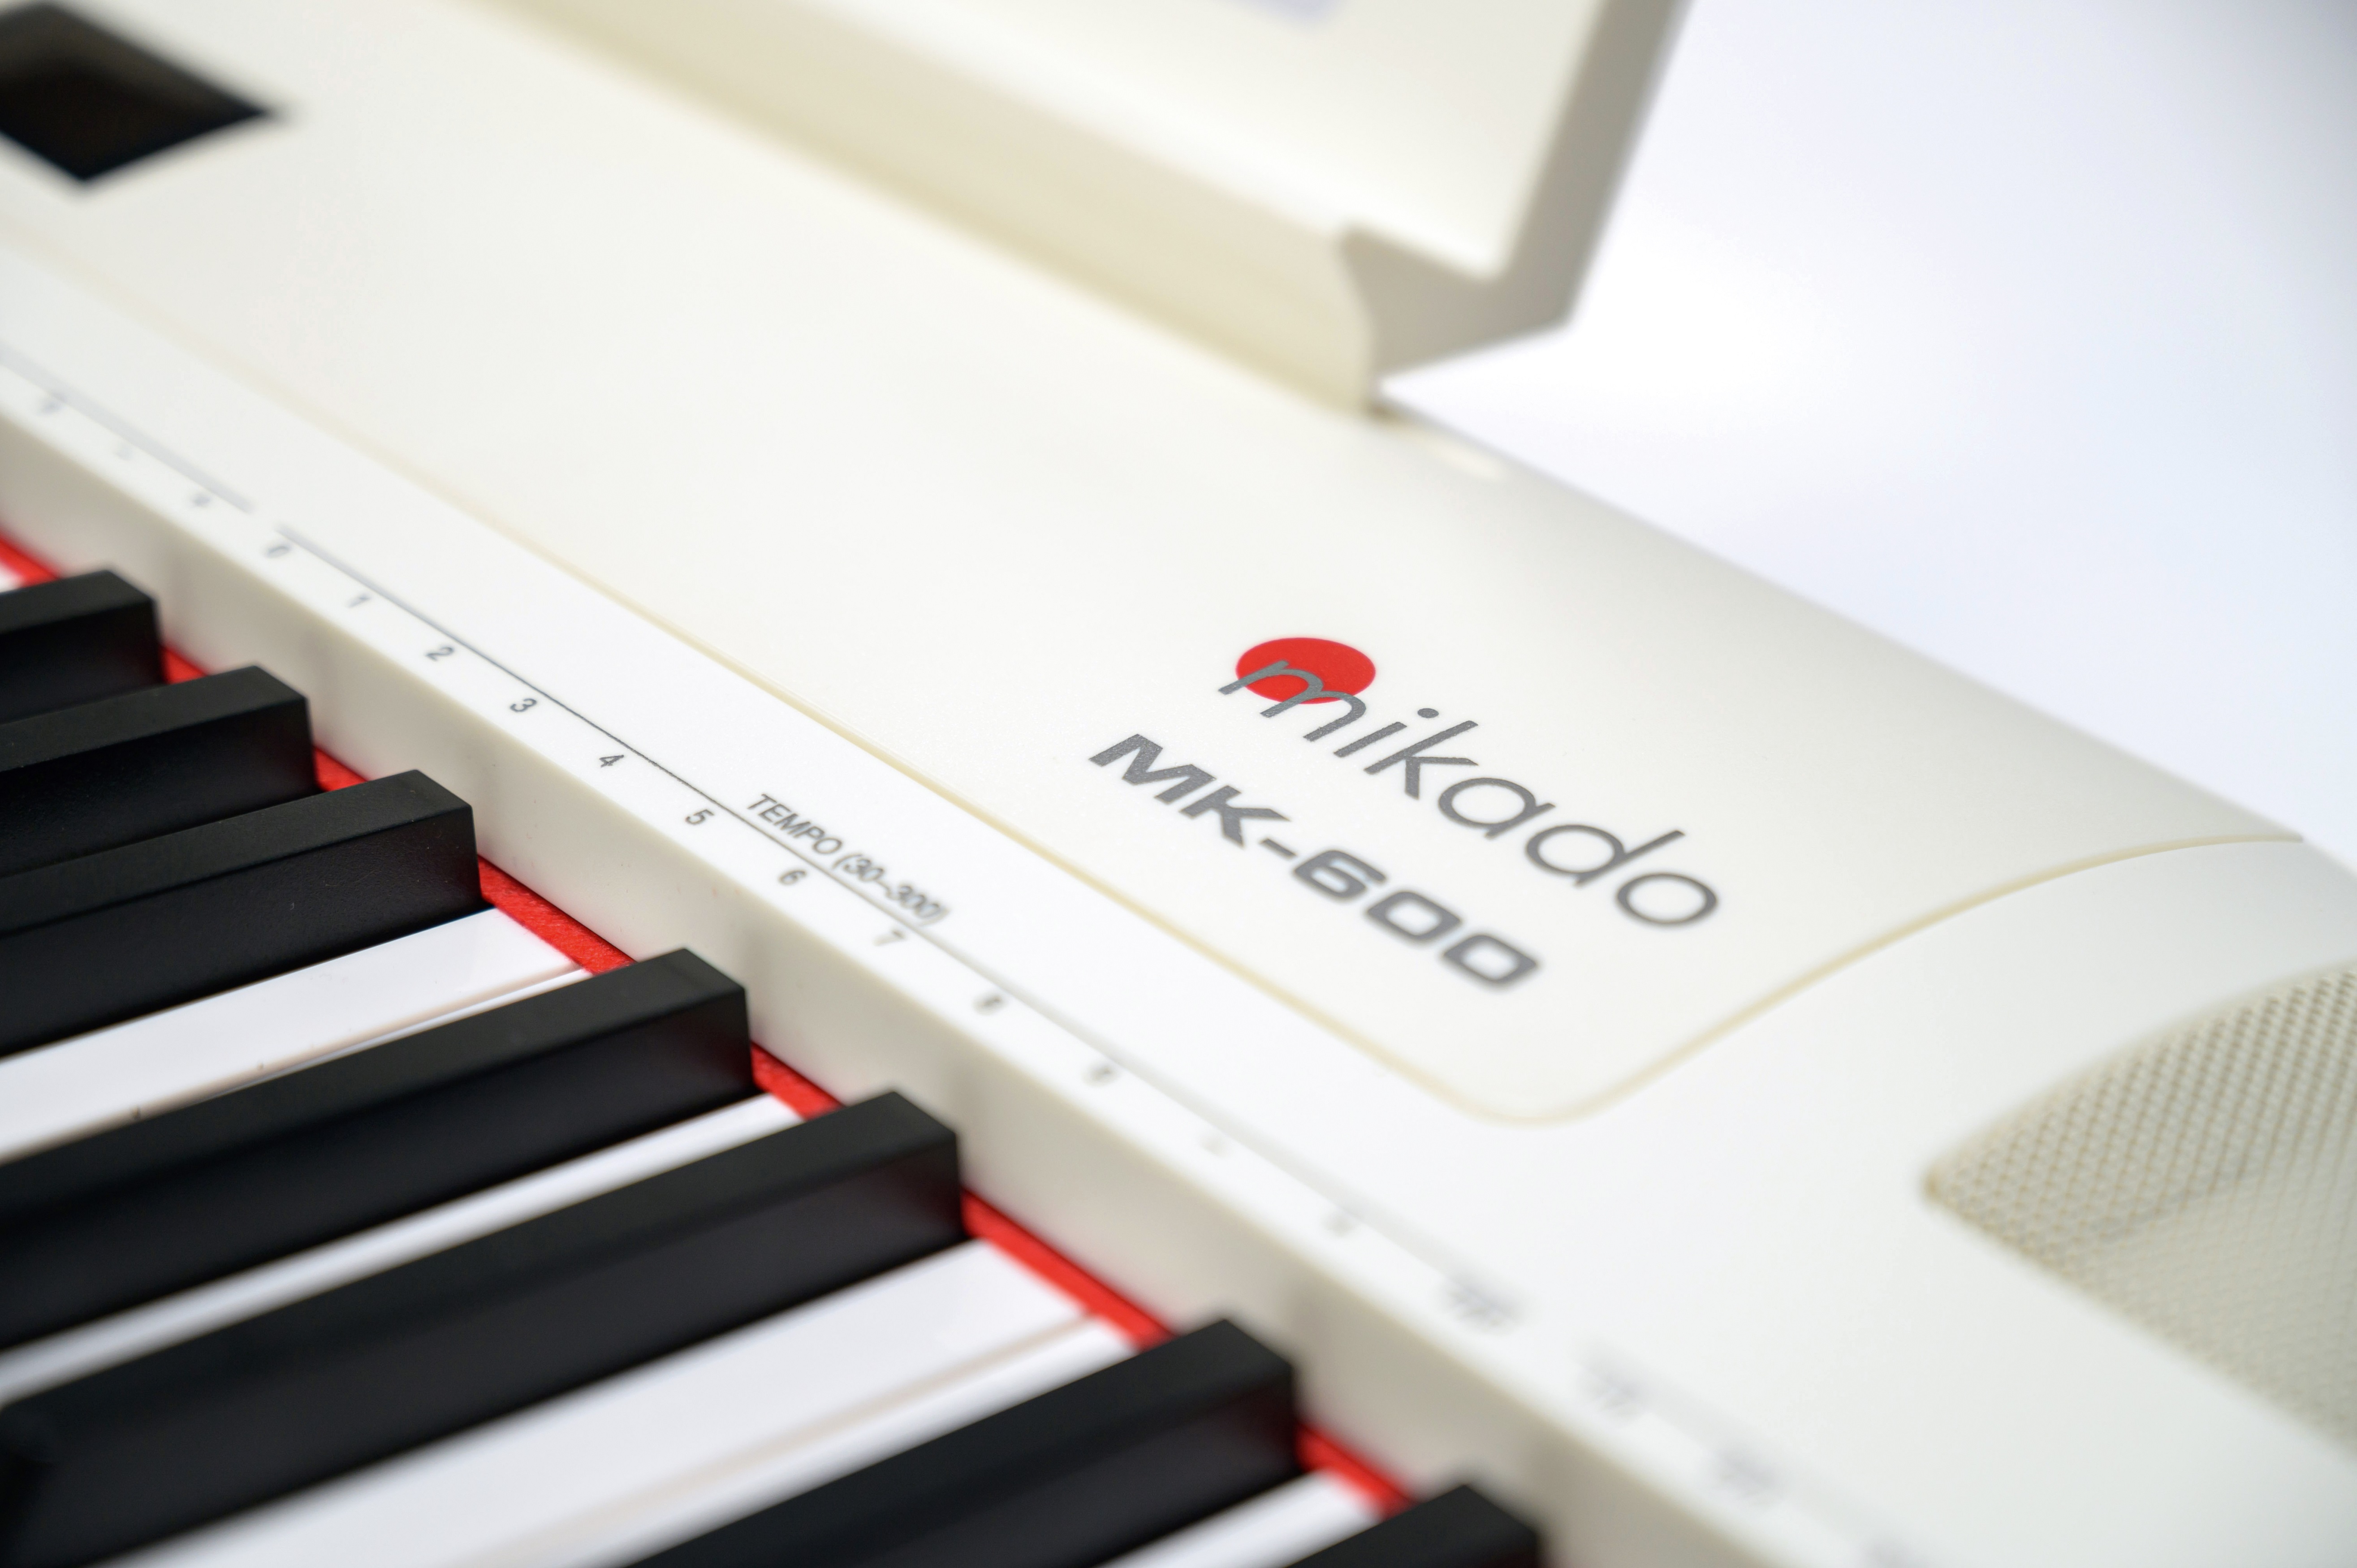 Mikado MK-600W Синтезатор 88 клавиш.  купить в prostore.me